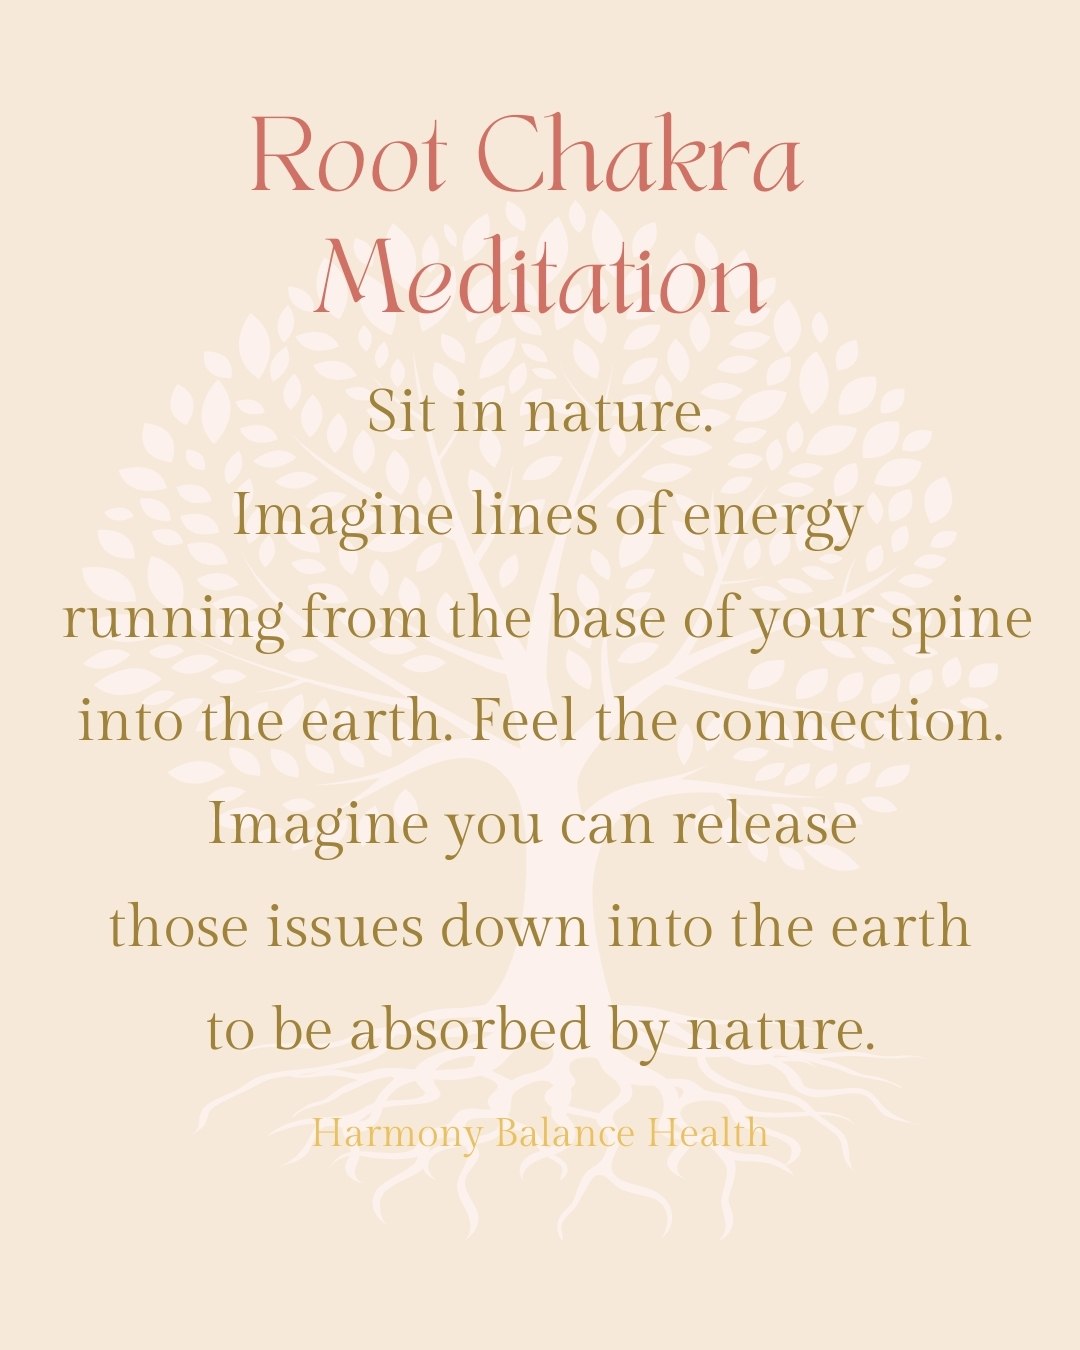 Root chakra meditation 